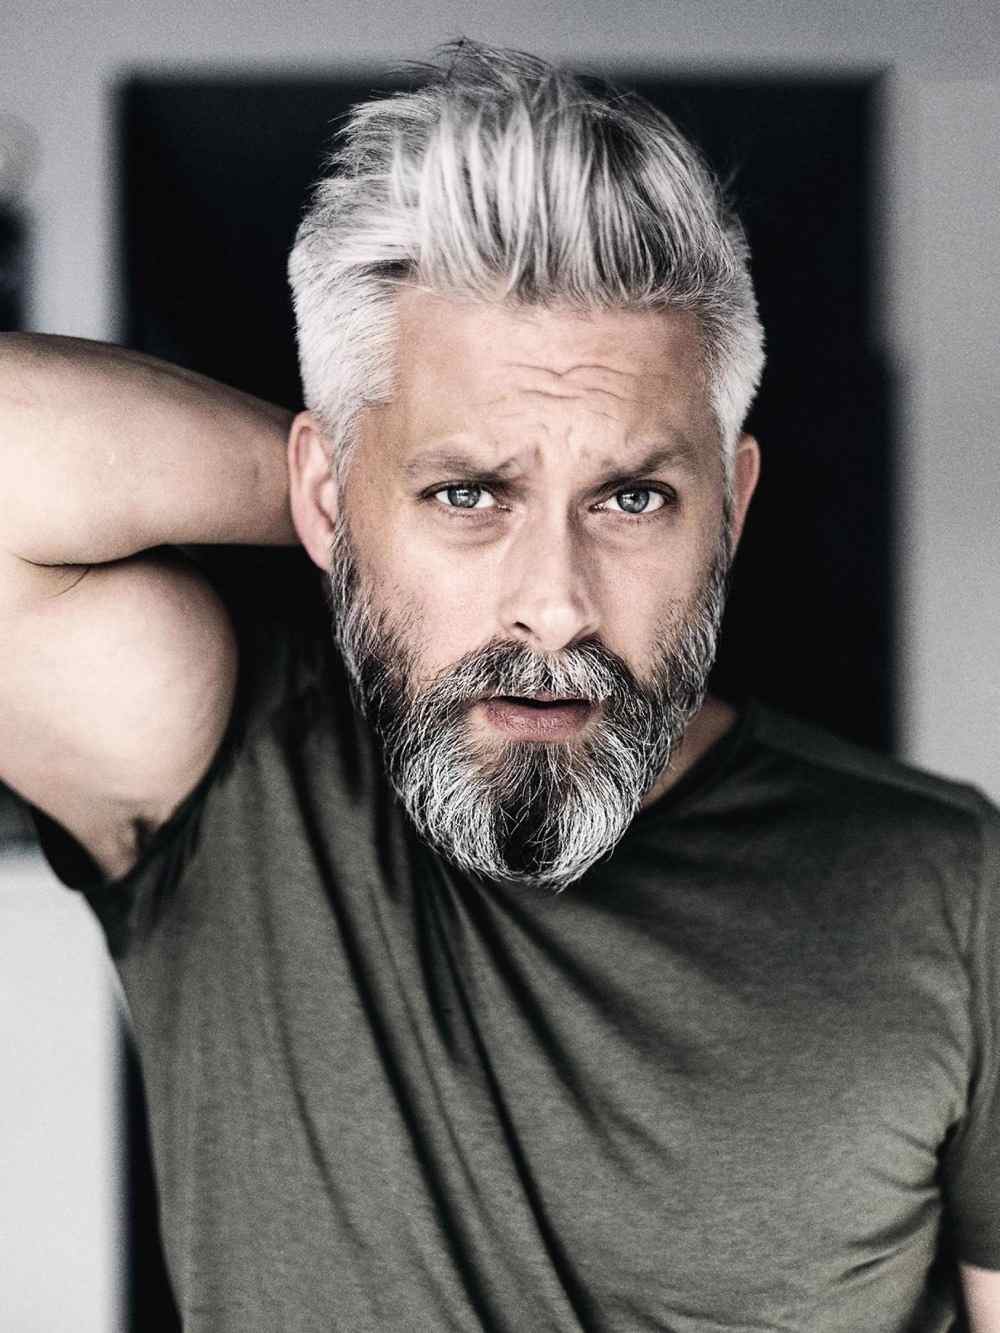 Mann grau gefärbte haare